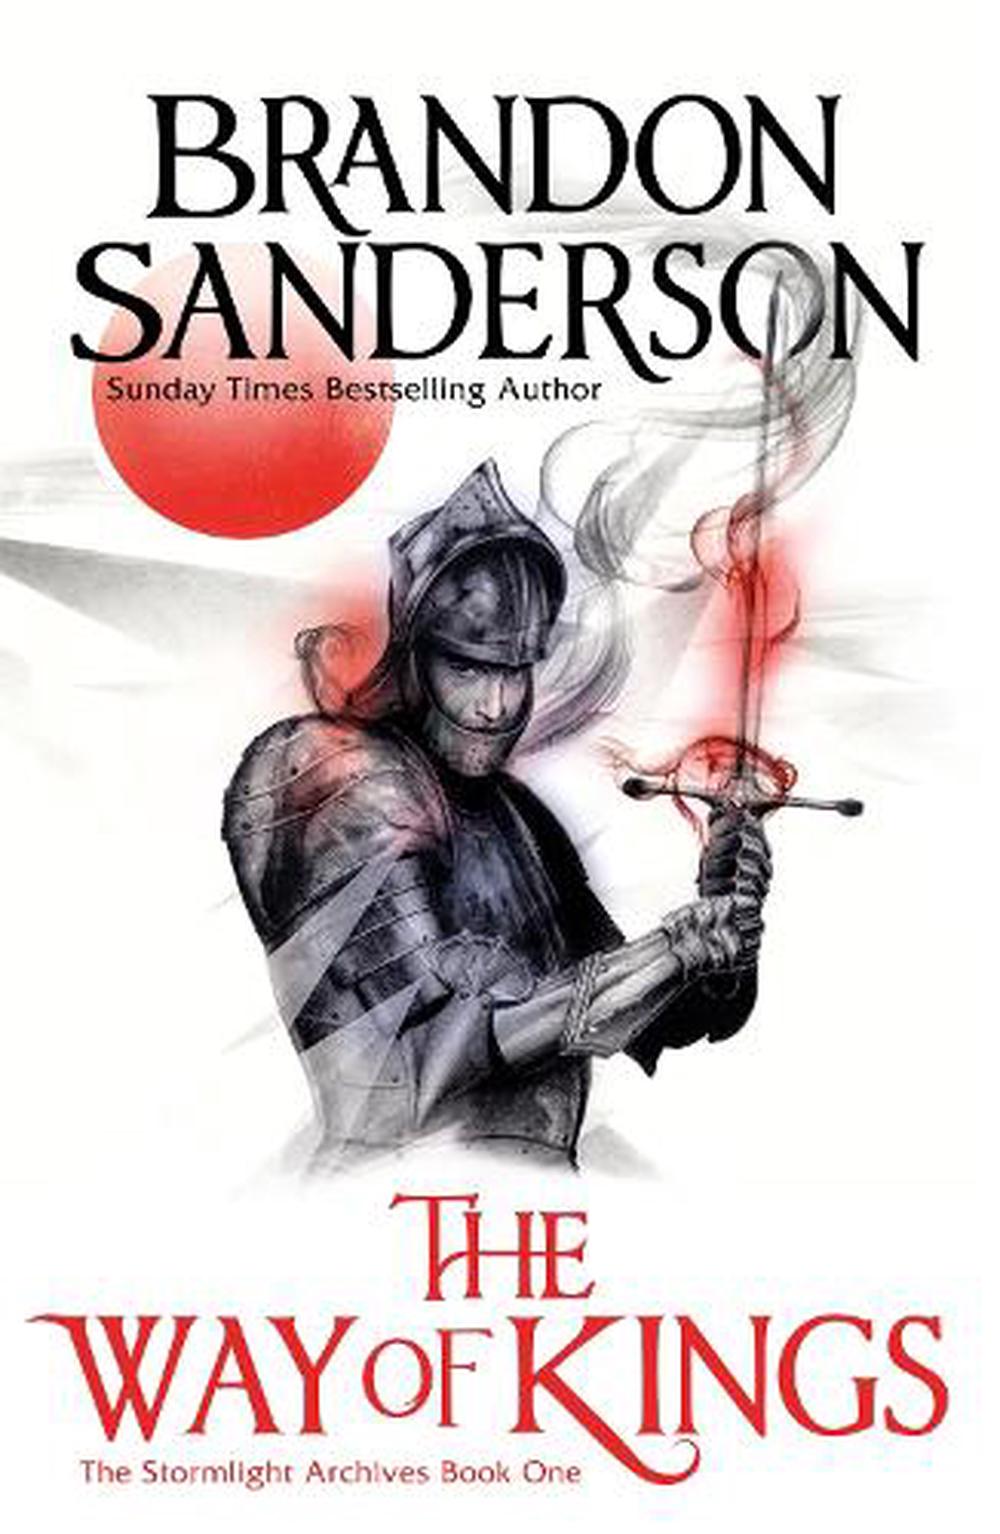 brandon sanderson books stormlight series